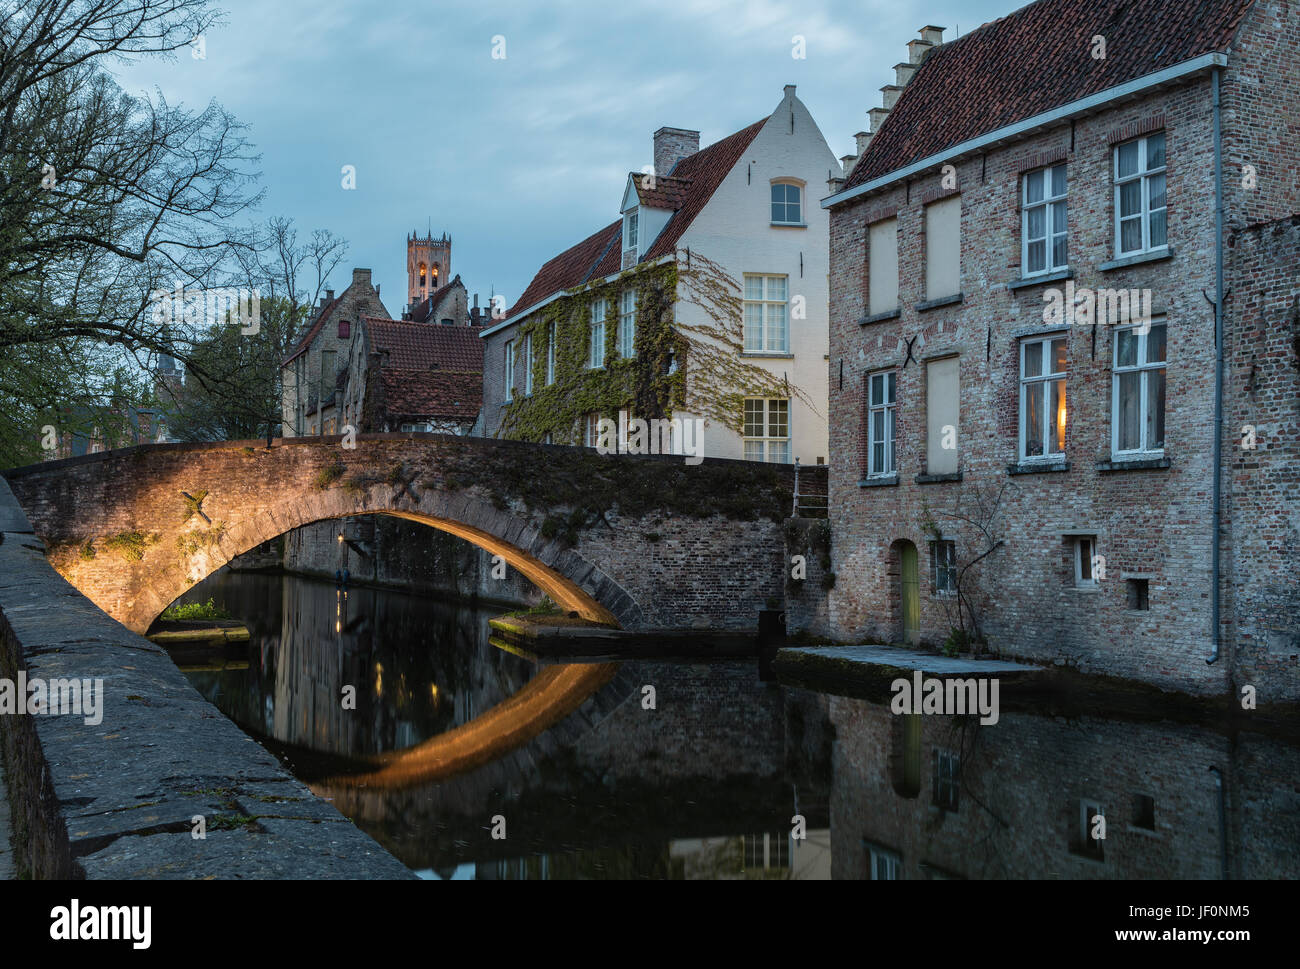 Brugge the romantic city Stock Photo